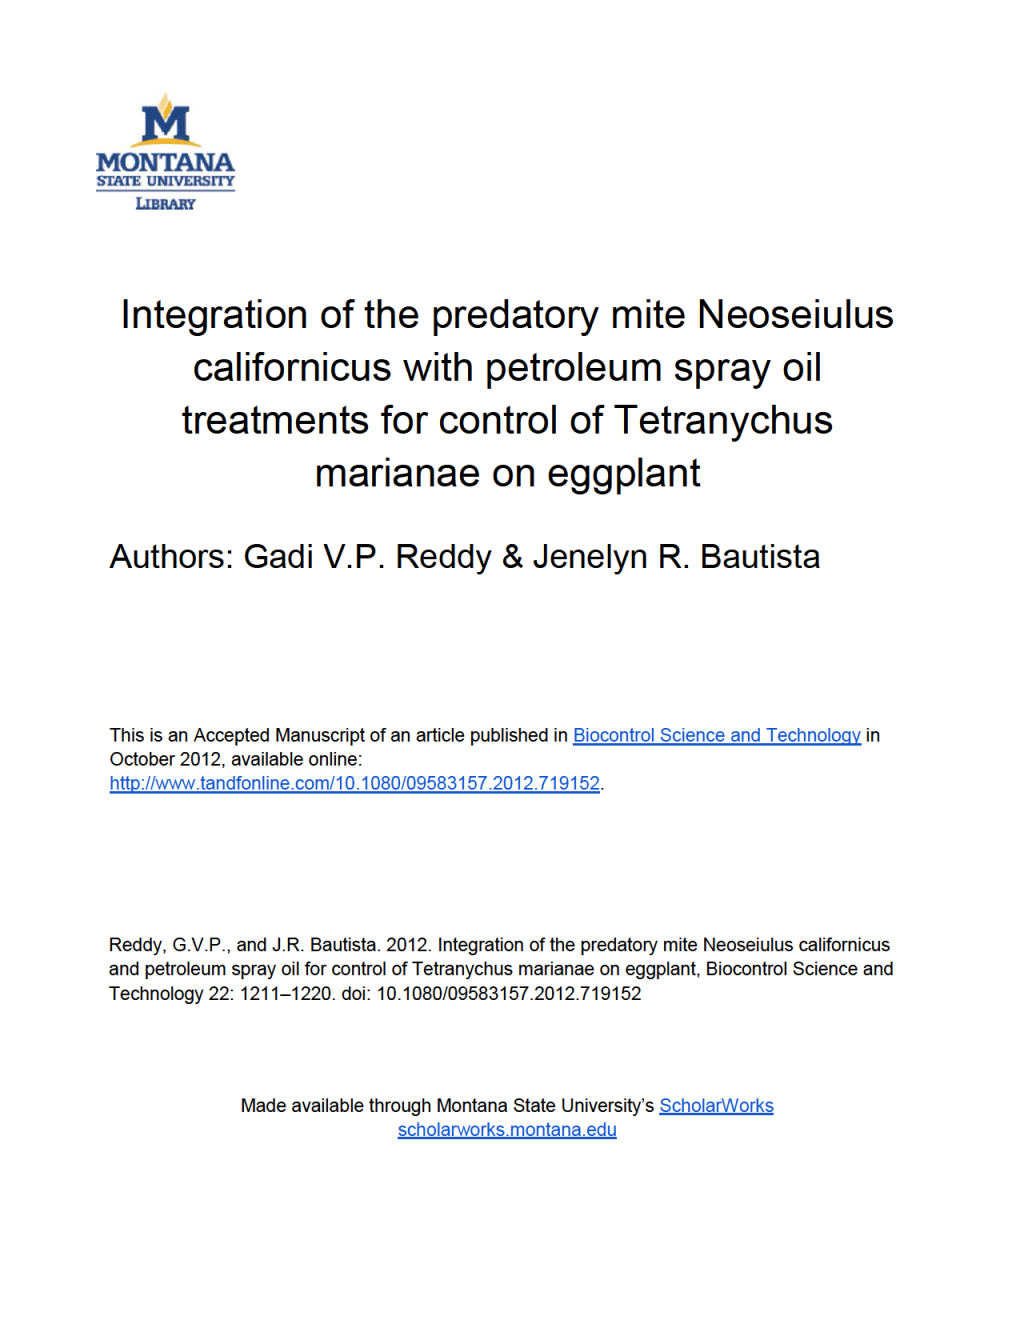 Integration of the Predatory Mite Neoseiulus Californicus with Petroleum Spray Oil Treatments for Control of Tetranychus Marianae on Eggplant